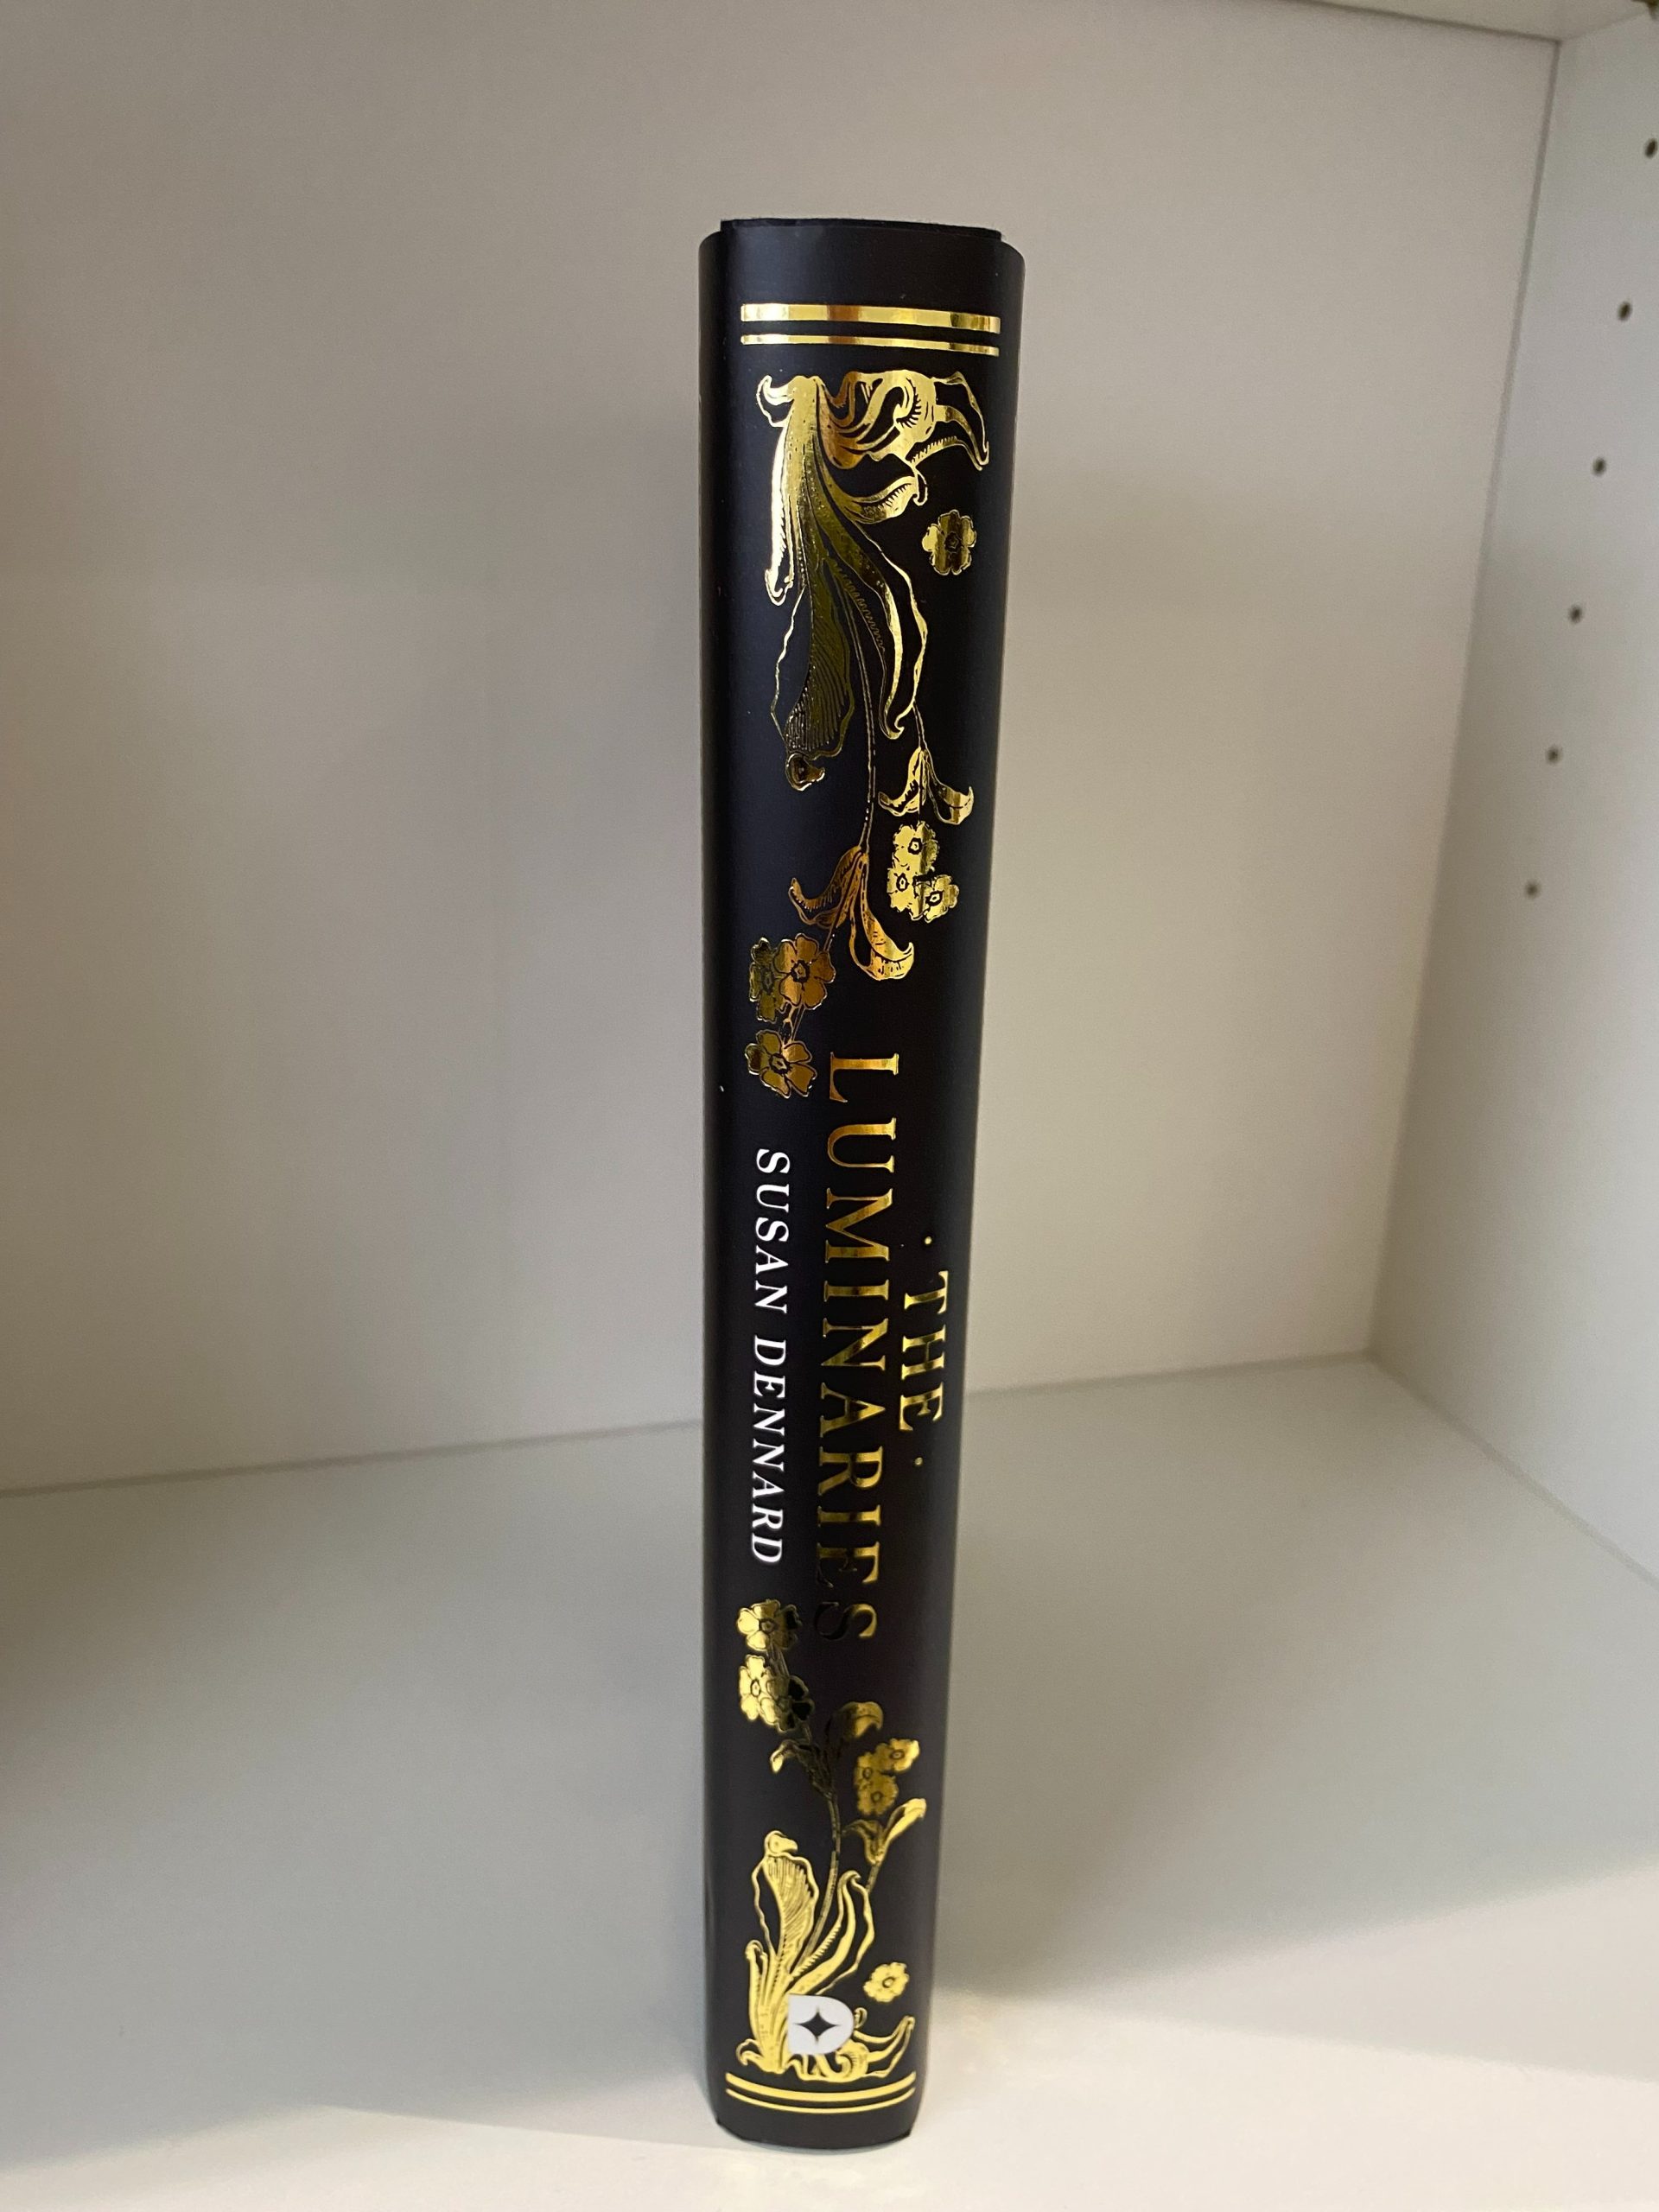 Illumicrate edition of The Luminaries by Susan Dennard